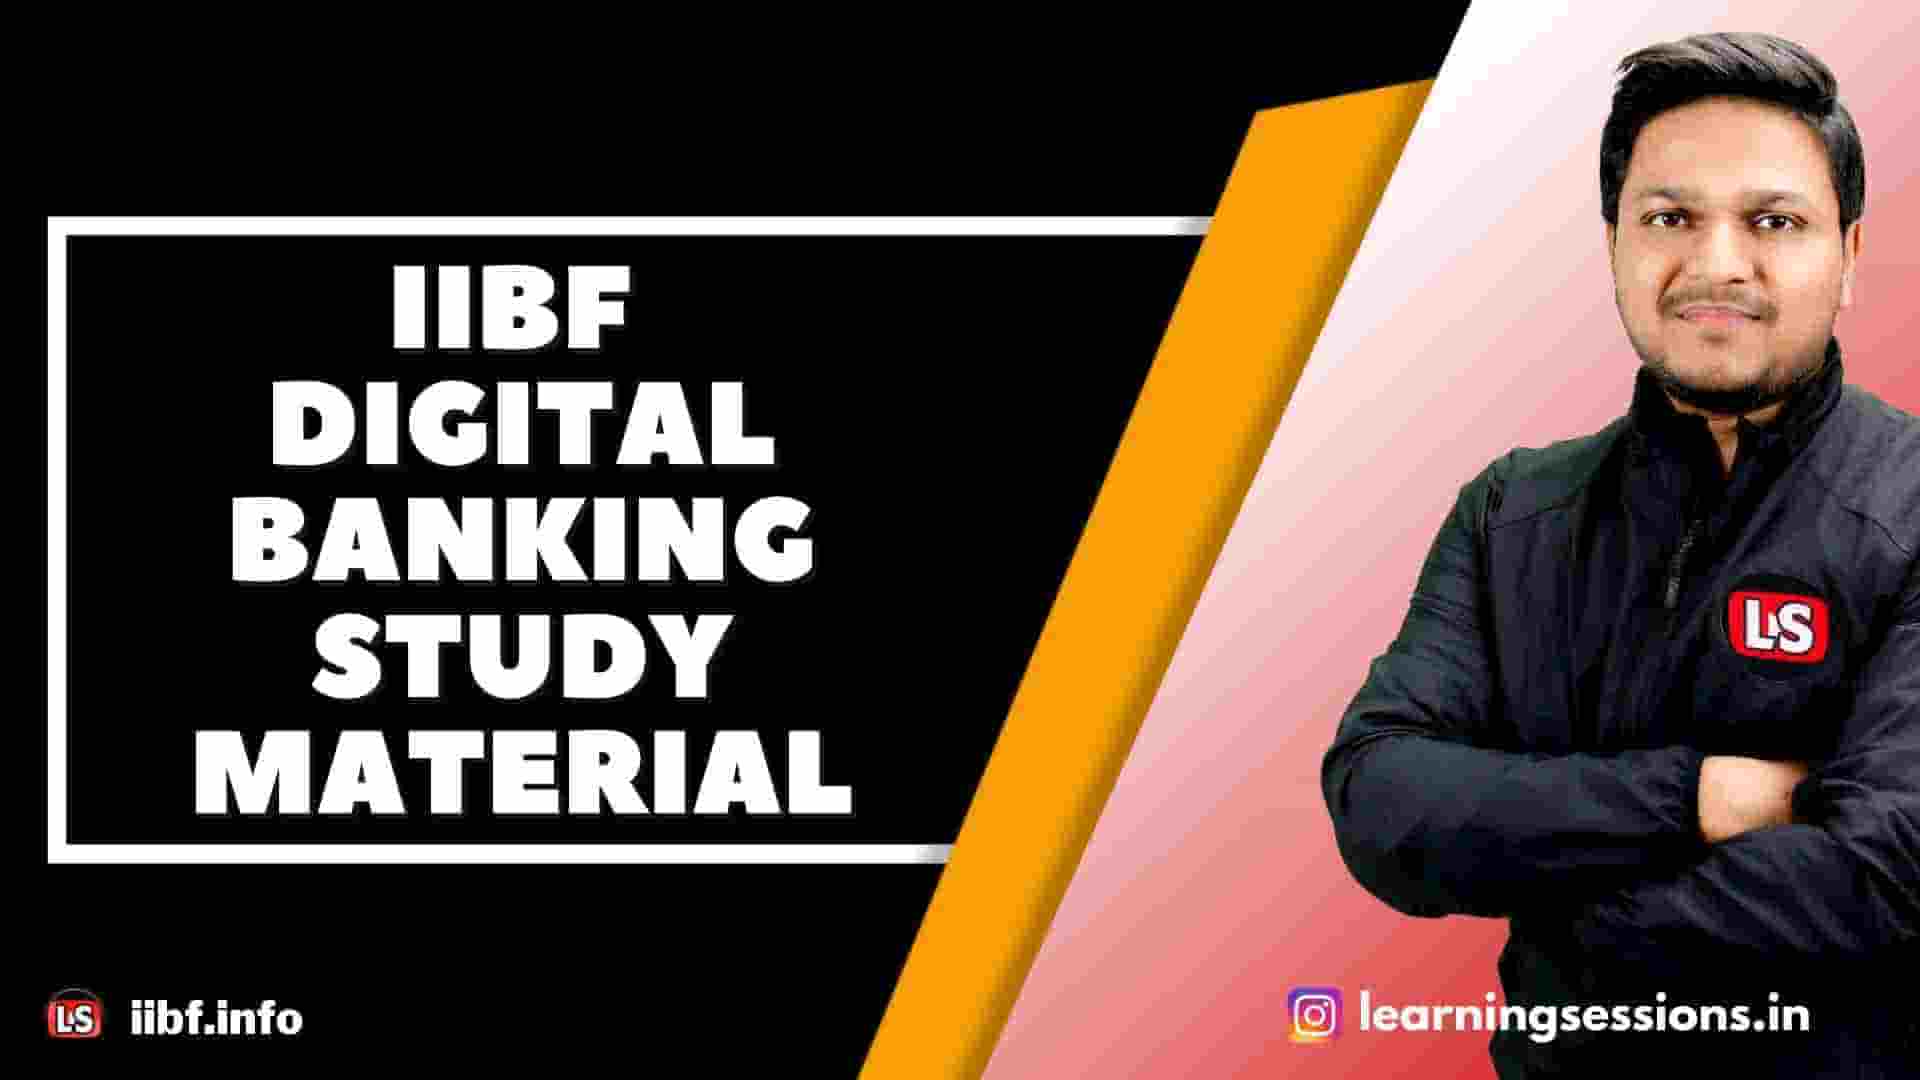 IIBF DIGITAL BANKING STUDY MATERIAL 2021-2022